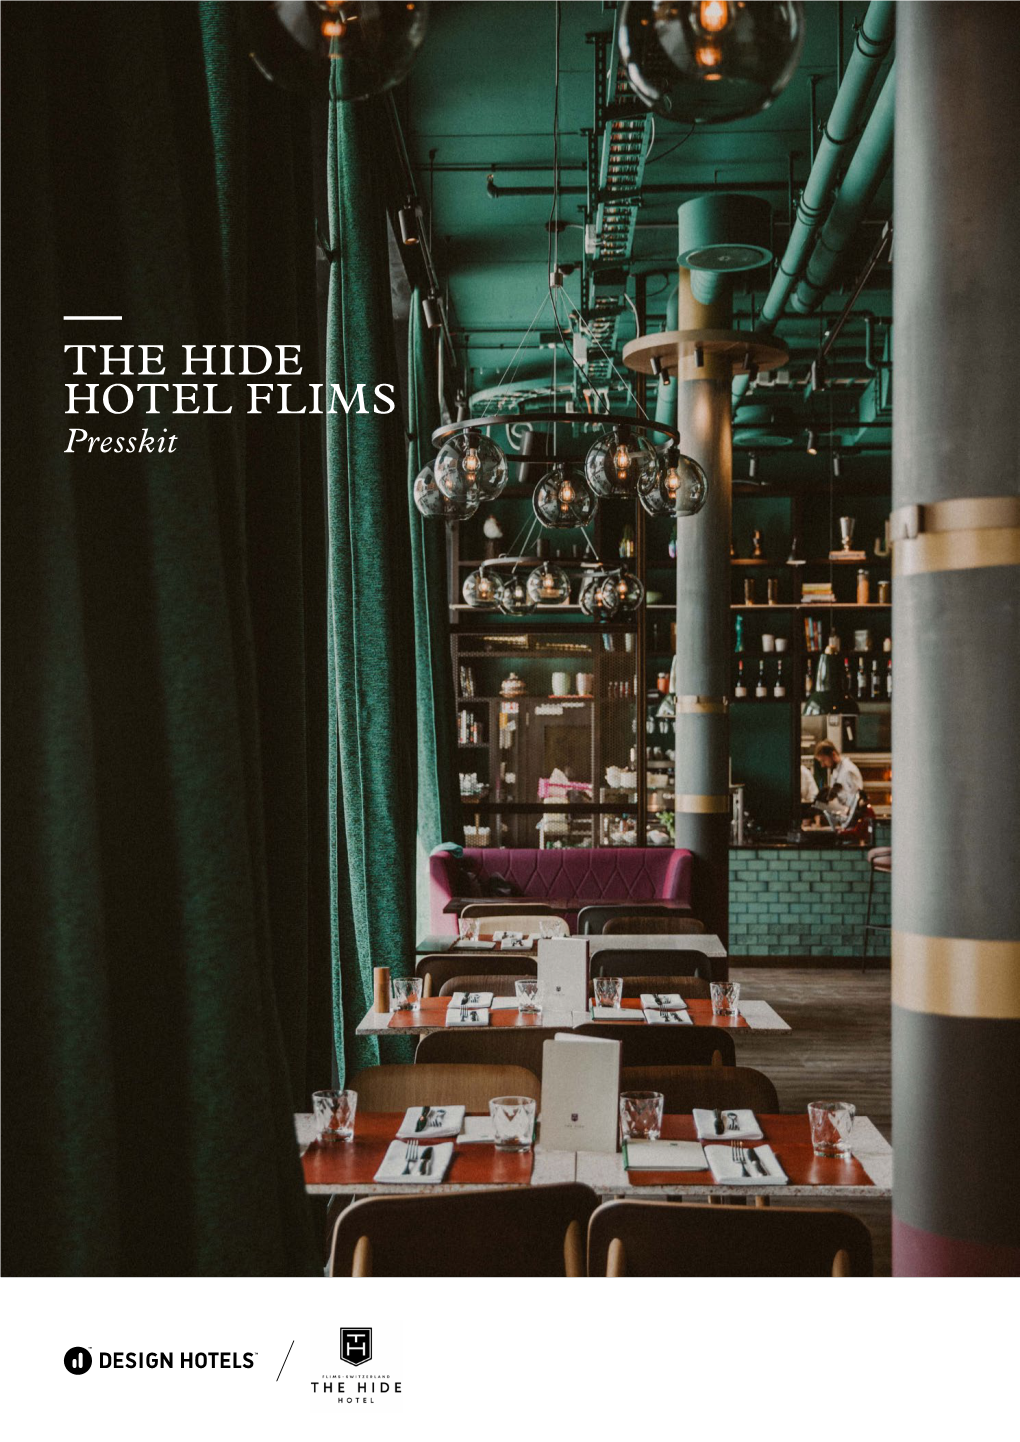 THE HIDE HOTEL FLIMS Presskit the HIDE HOTEL FLIMS